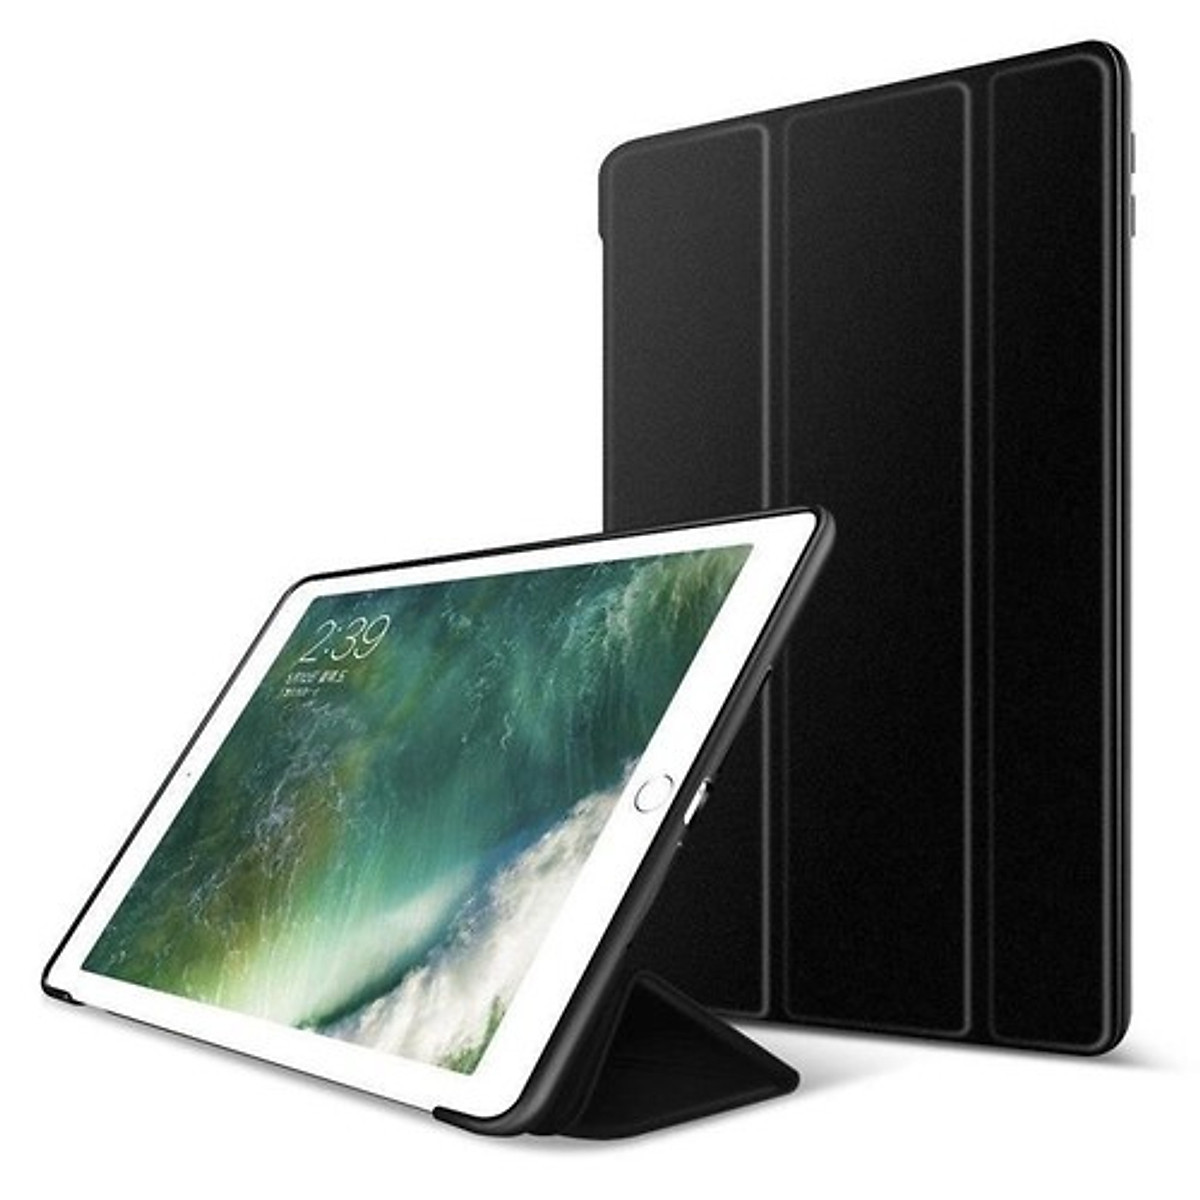 Bao da doanh nhân silicone dẻo cao cấp dành cho iPad mini 123/ mini 4/ mini 5/ Ipad pro 9.7/ Ipad Air/ Ipad Air 2/ Ipad 2017/ Ipad 2018/ Ipad pro 10.5/ Ipad Air 3 2019/ Ipad 11 inch